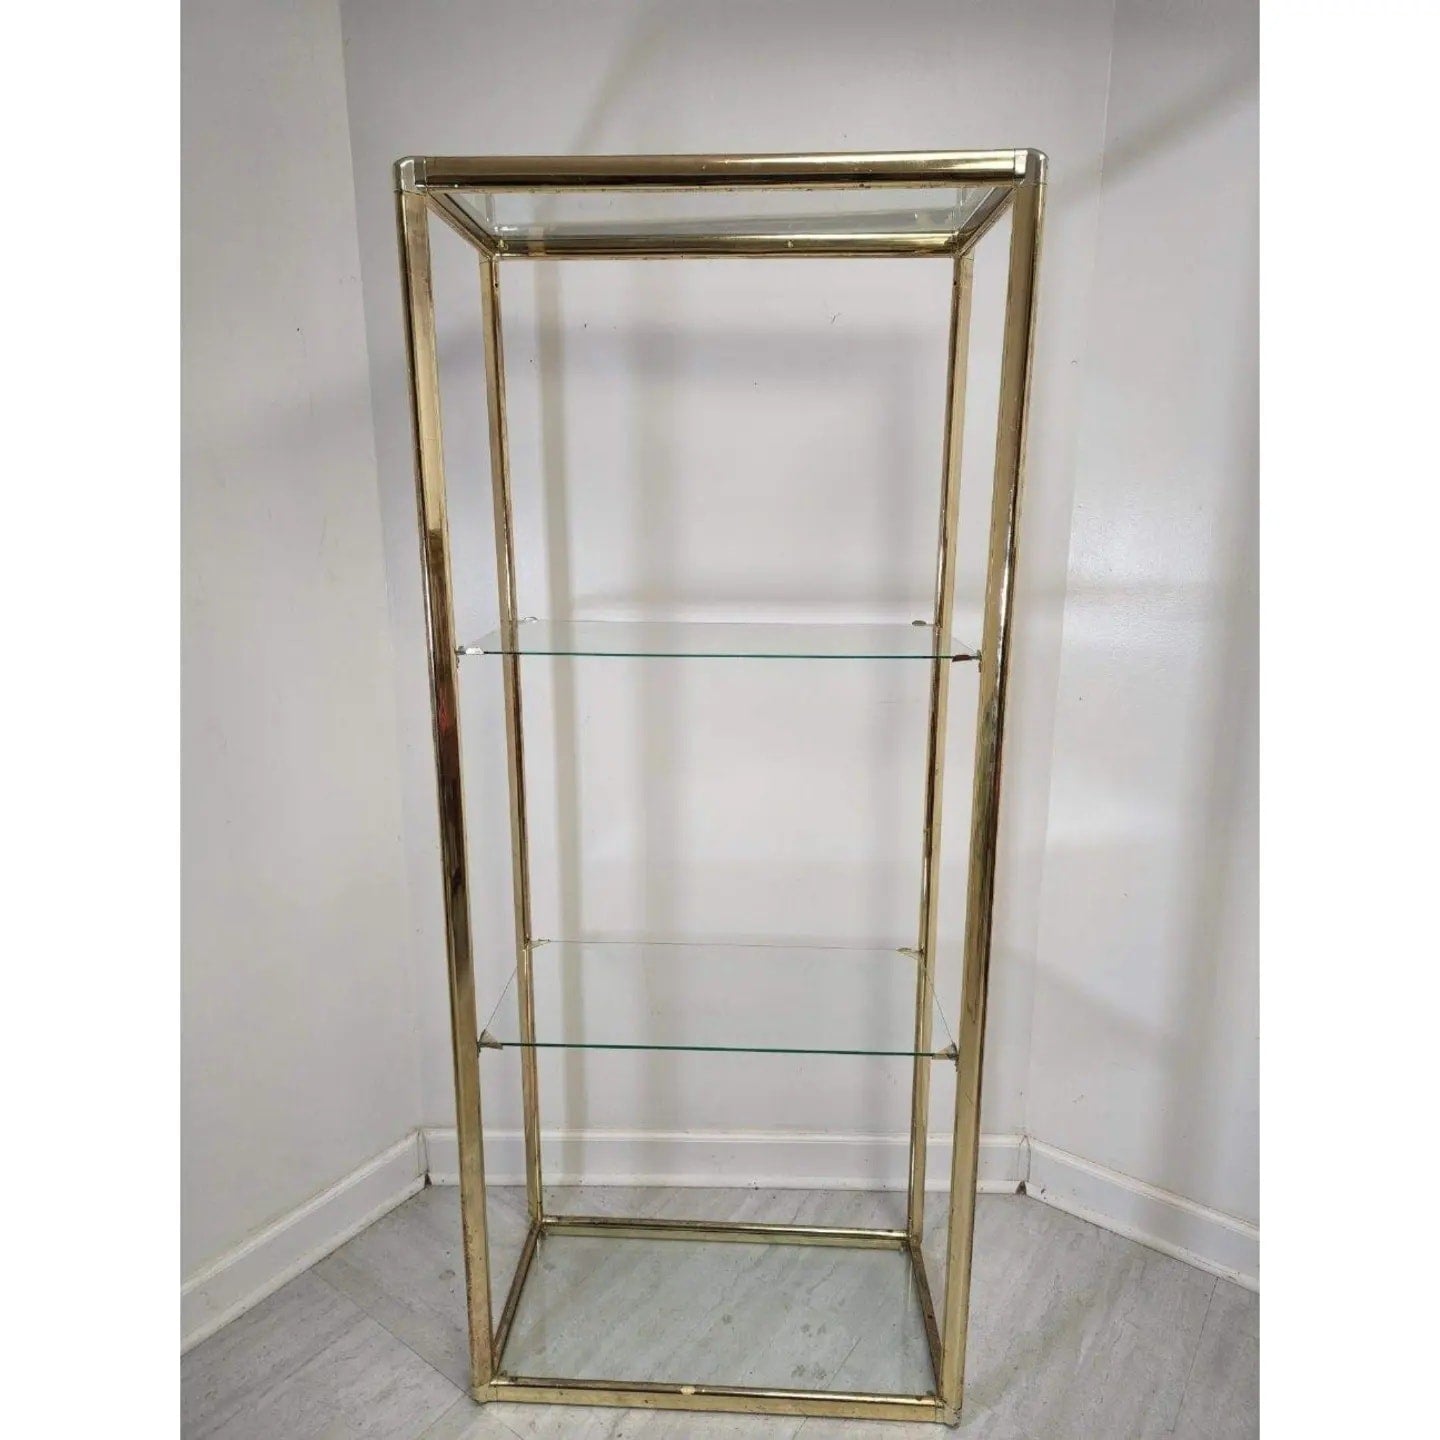 Vintage Brass & Glass Etagere Display Shelving Unit